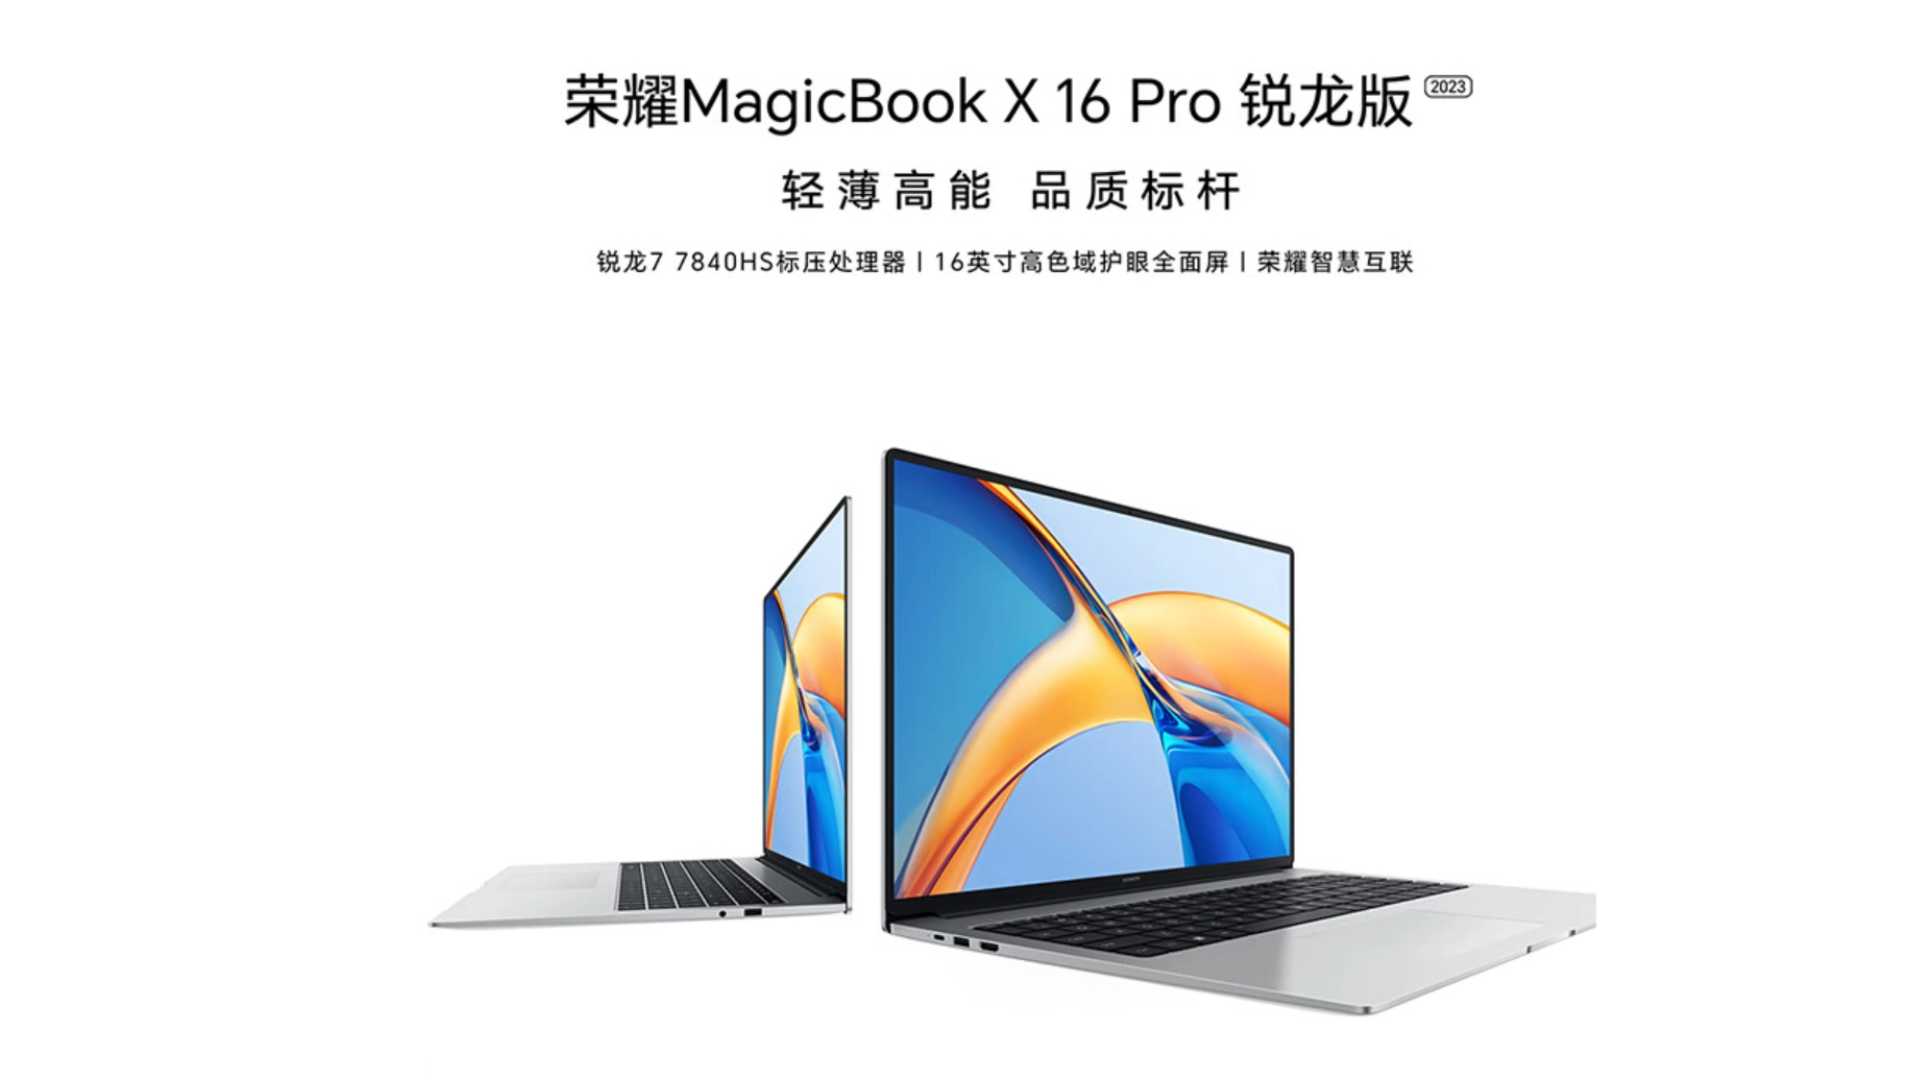 Honor magicbook x 16 pro ryzen. Honor MAGICBOOK X 16 Pro. Honor MAGICBOOK 16 Pro 2023. Honor MAGICBOOK X 16 Pro amd2023. Honor MAGICBOOK x16 Pro Ryzen 7.